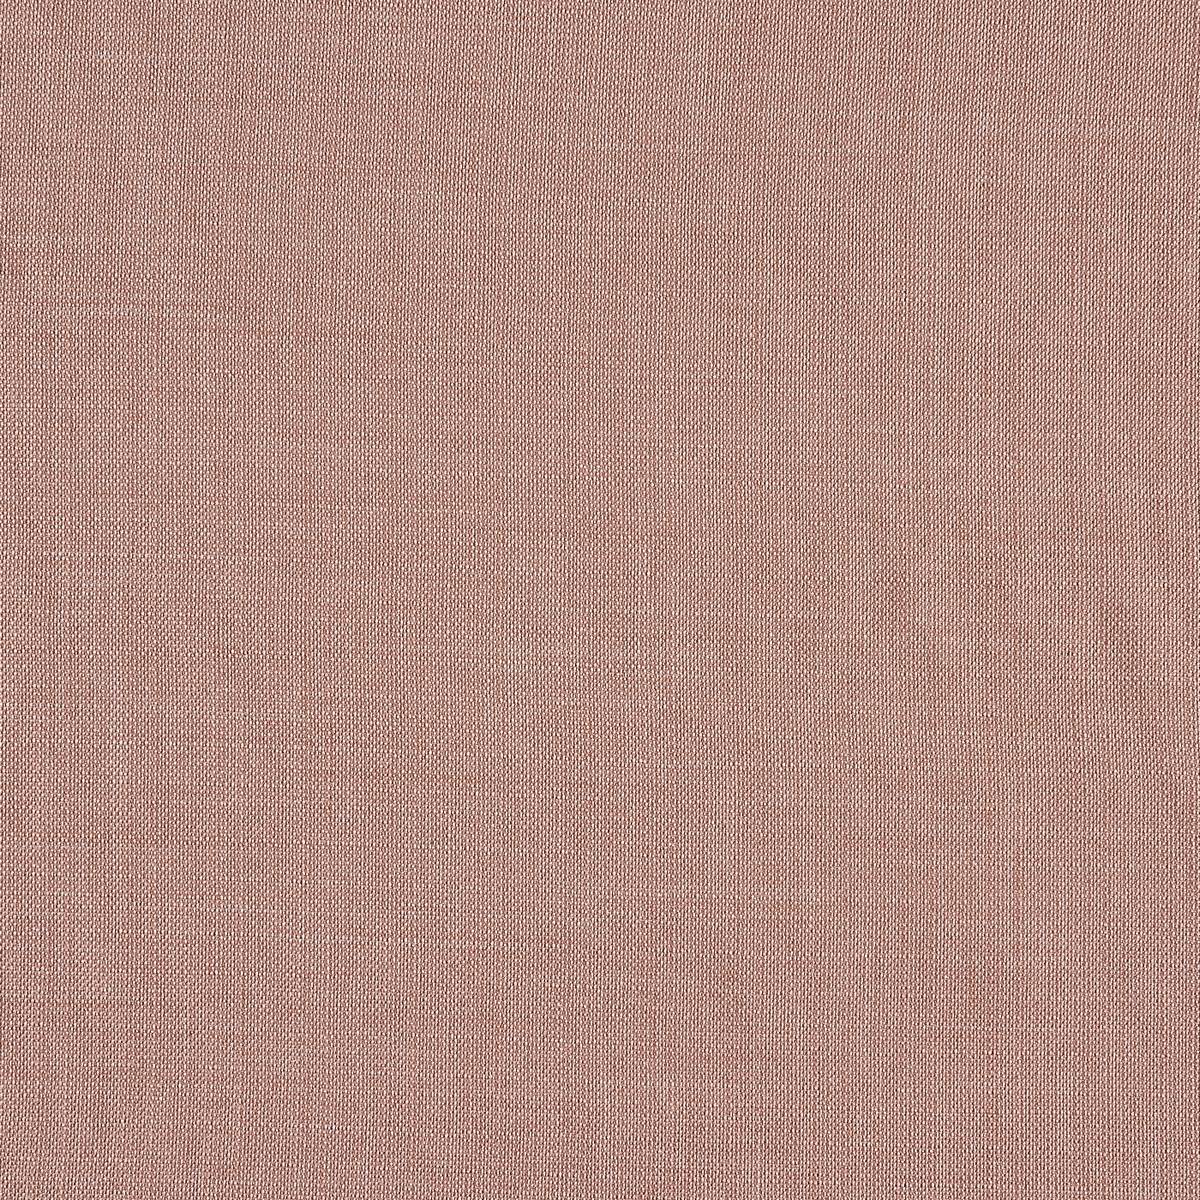 Franklin Rose Dust Fabric by Prestigious Textiles